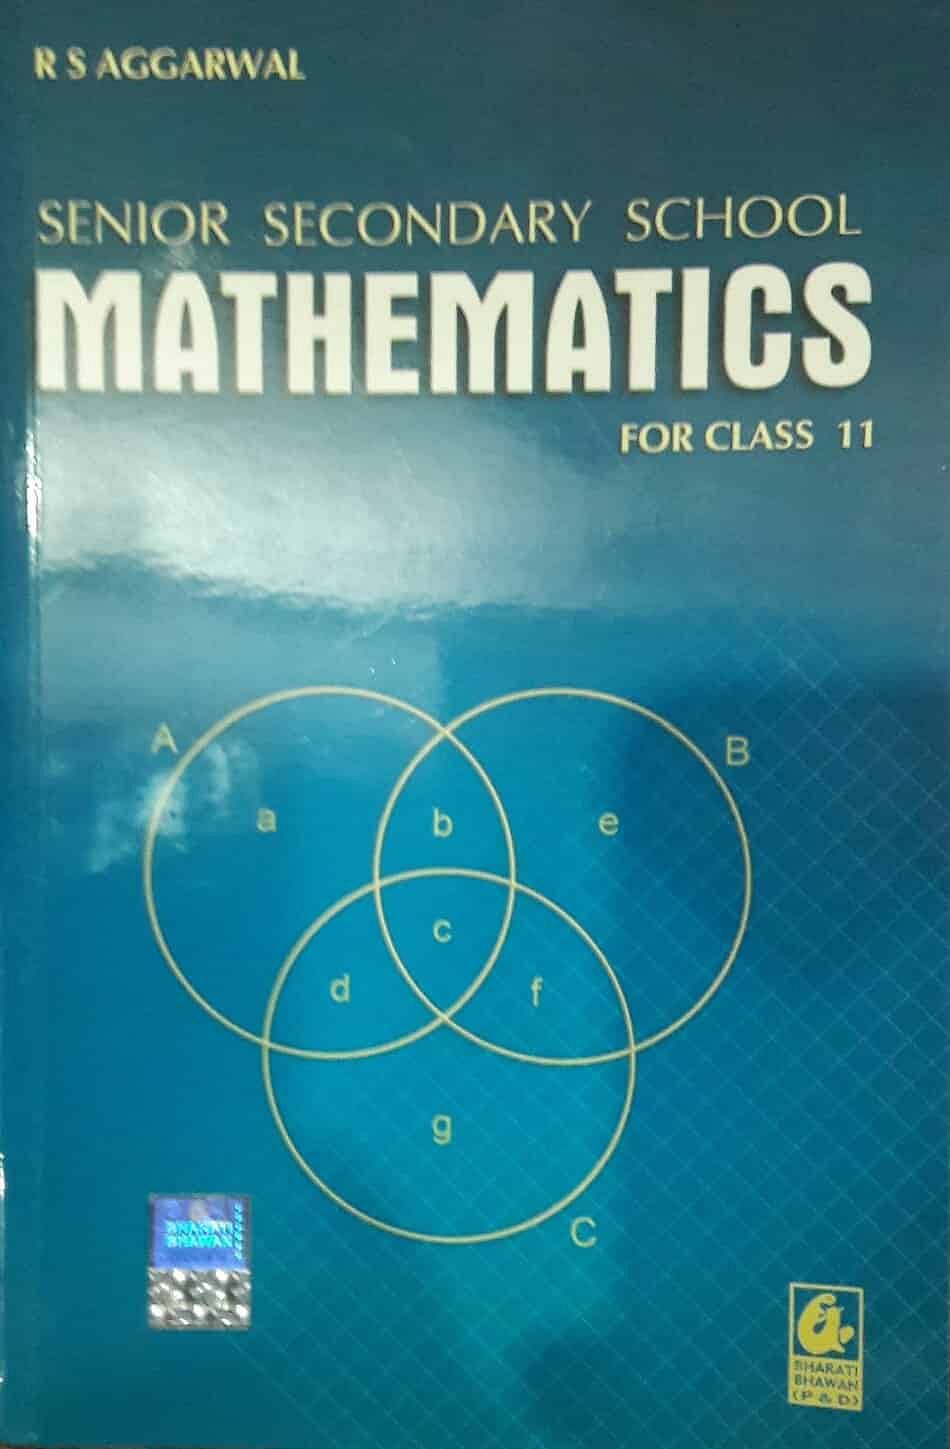 Mathematics by RS Aggarwal